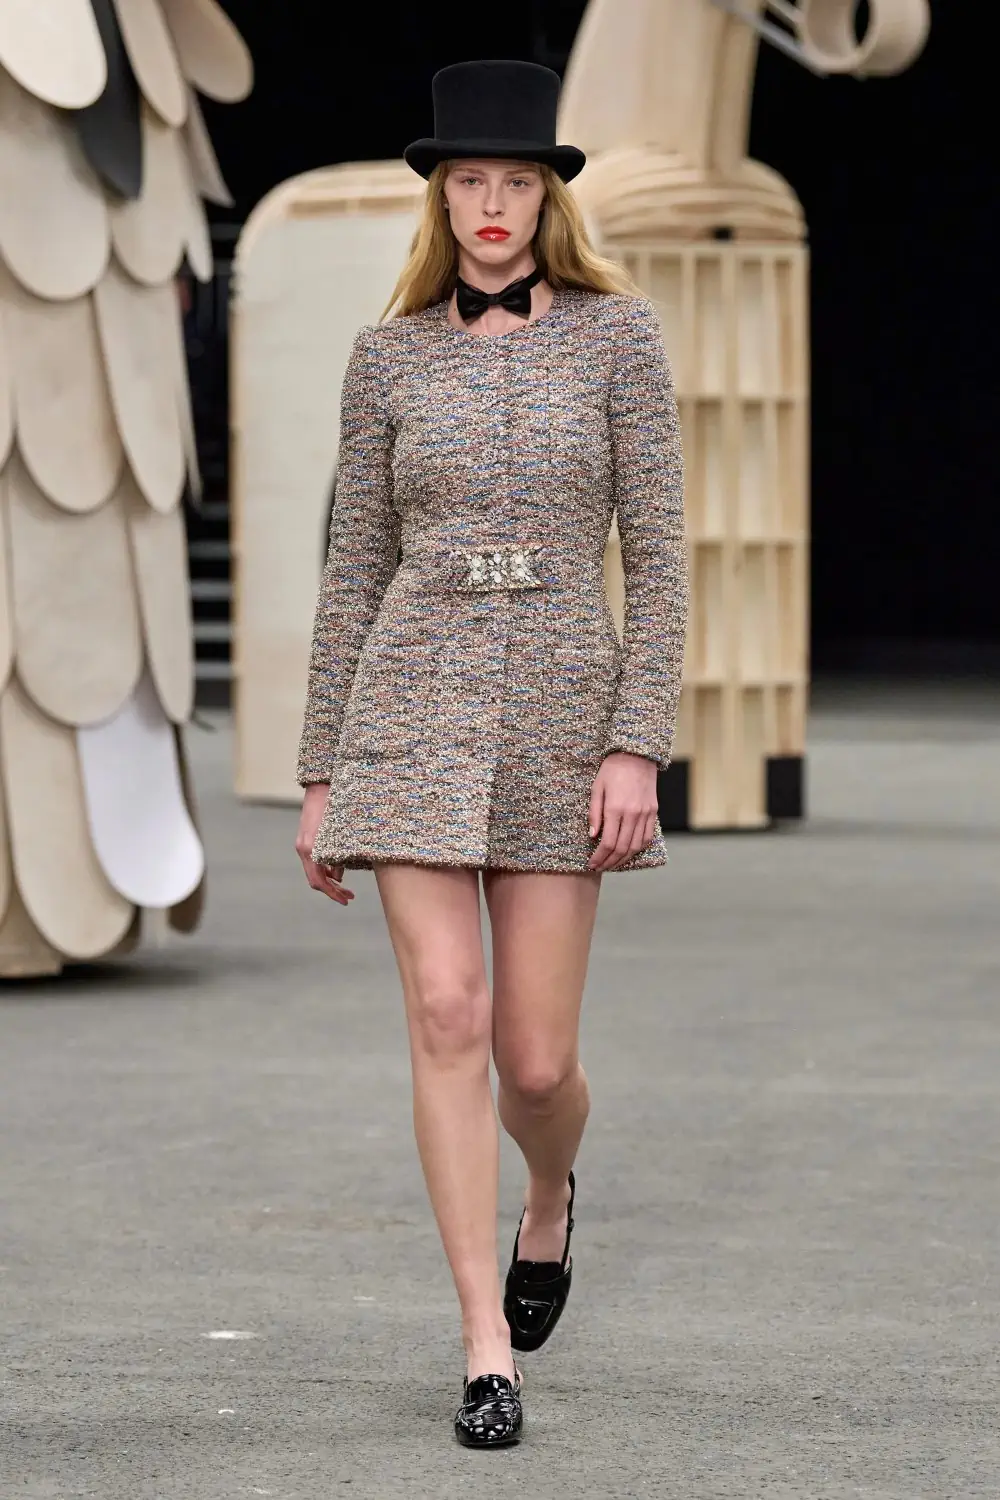 Chanels Spring Collection Was Inspired by Kristen Stewart  WWD